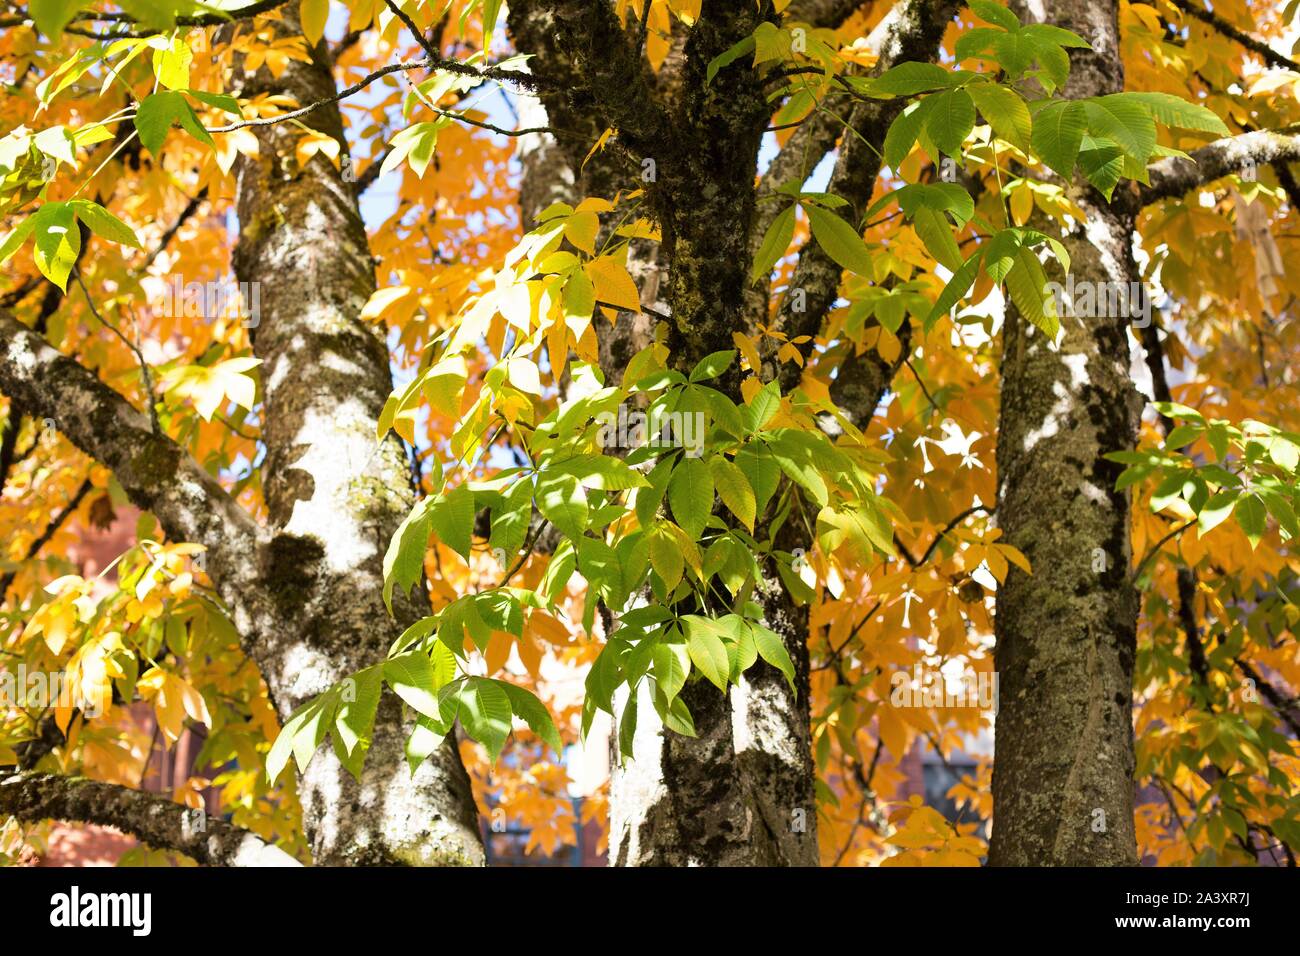 Aesculus flava - the yellow buckeye tree. Stock Photo